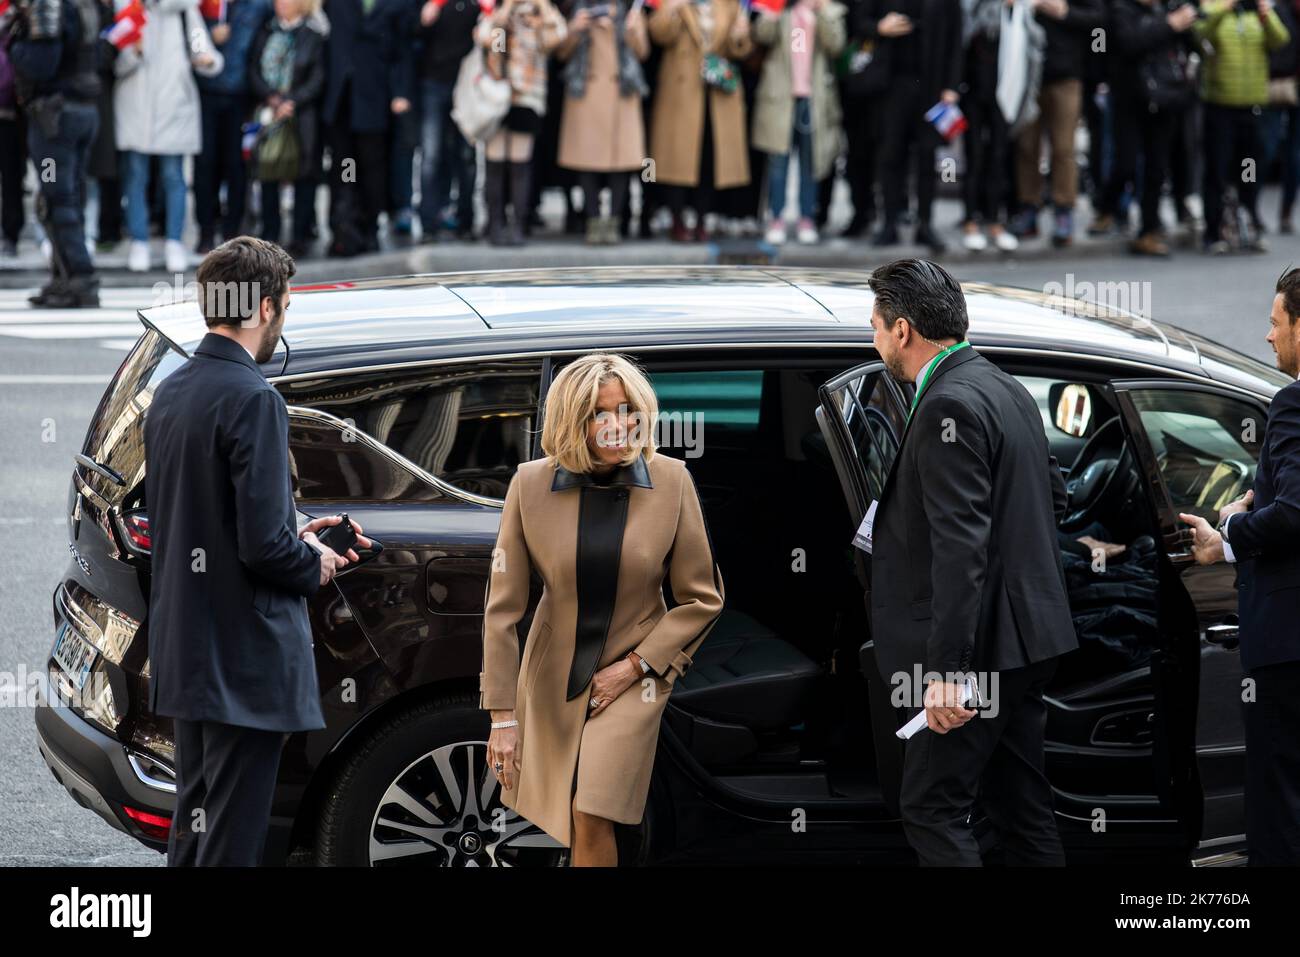 Peng Liyuan, moglie del presidente cinese, ha partecipato lunedì al Palais Garnier con Brigitte Macron, moglie del presidente francese. Foto Stock